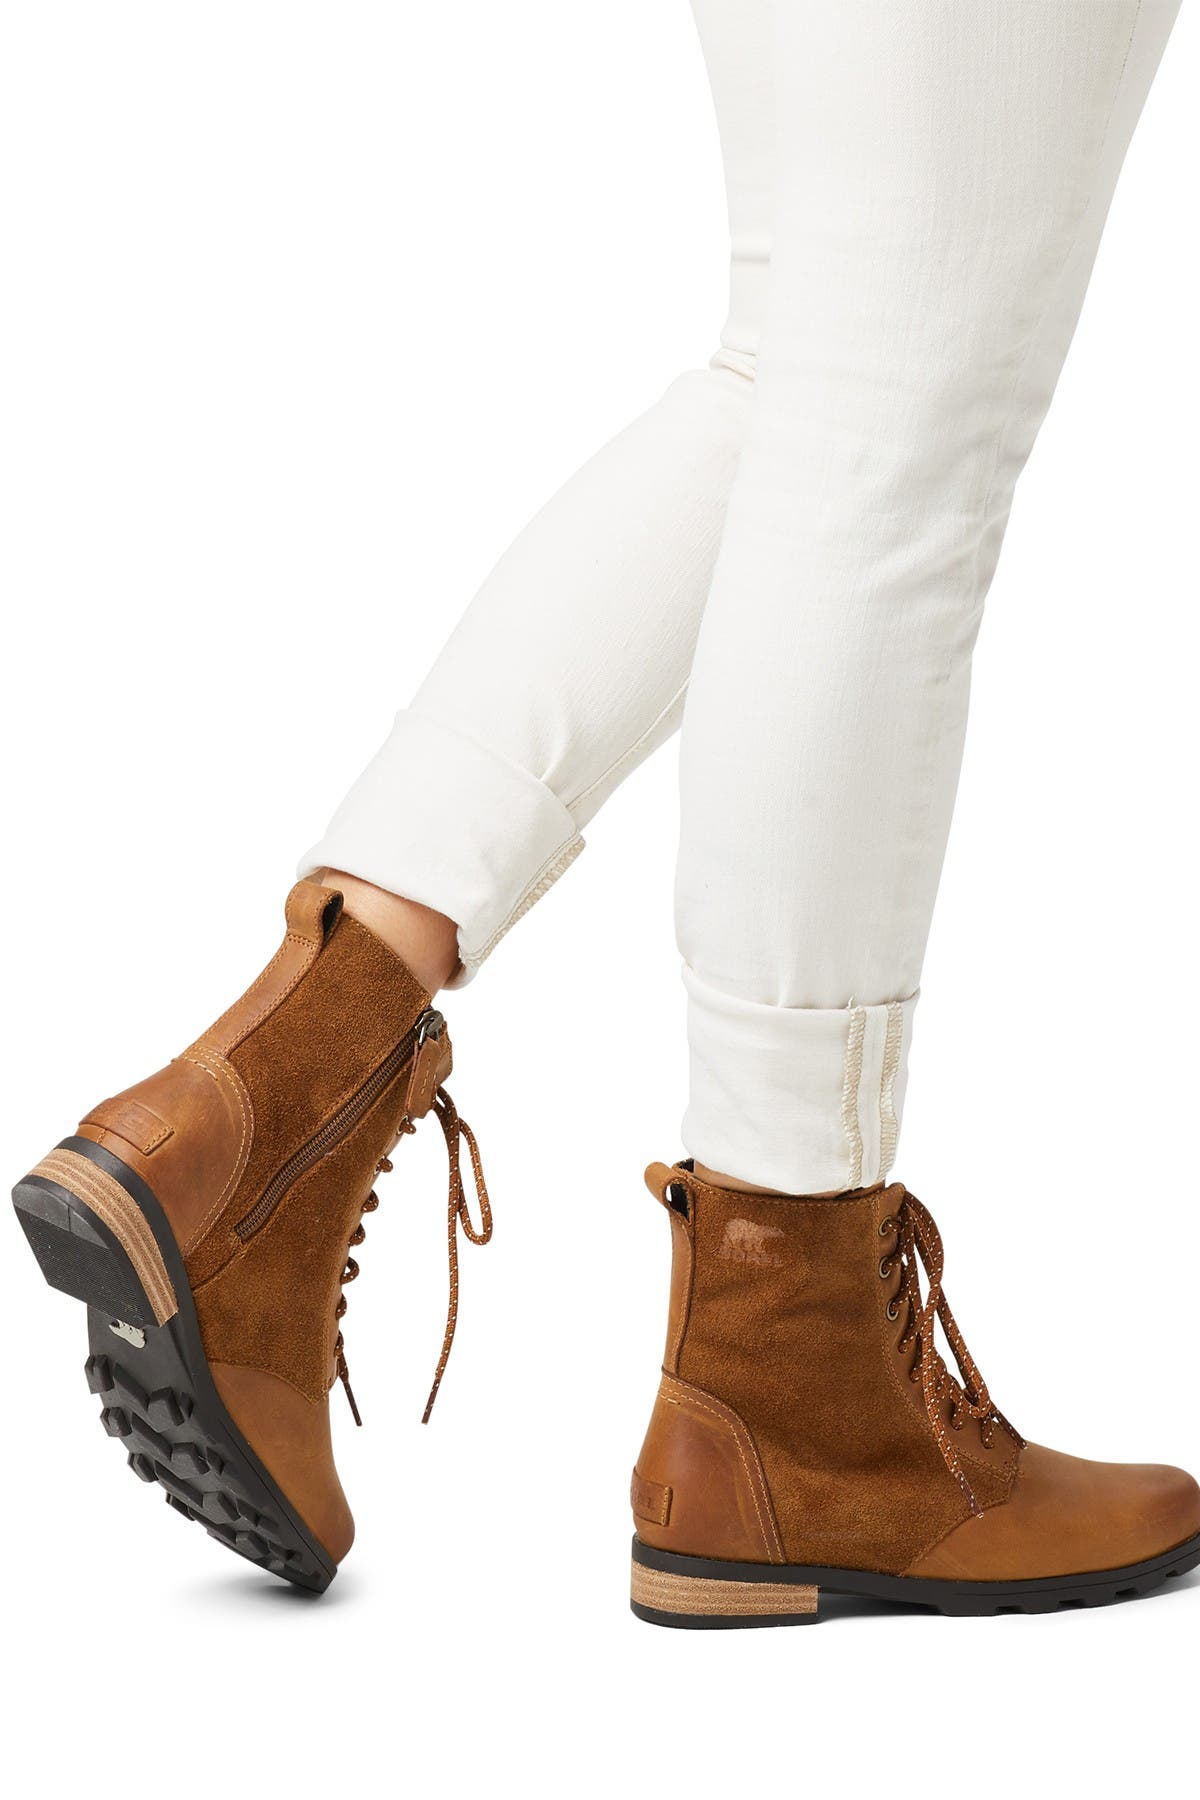 sorel emelie mid leather waterproof boots